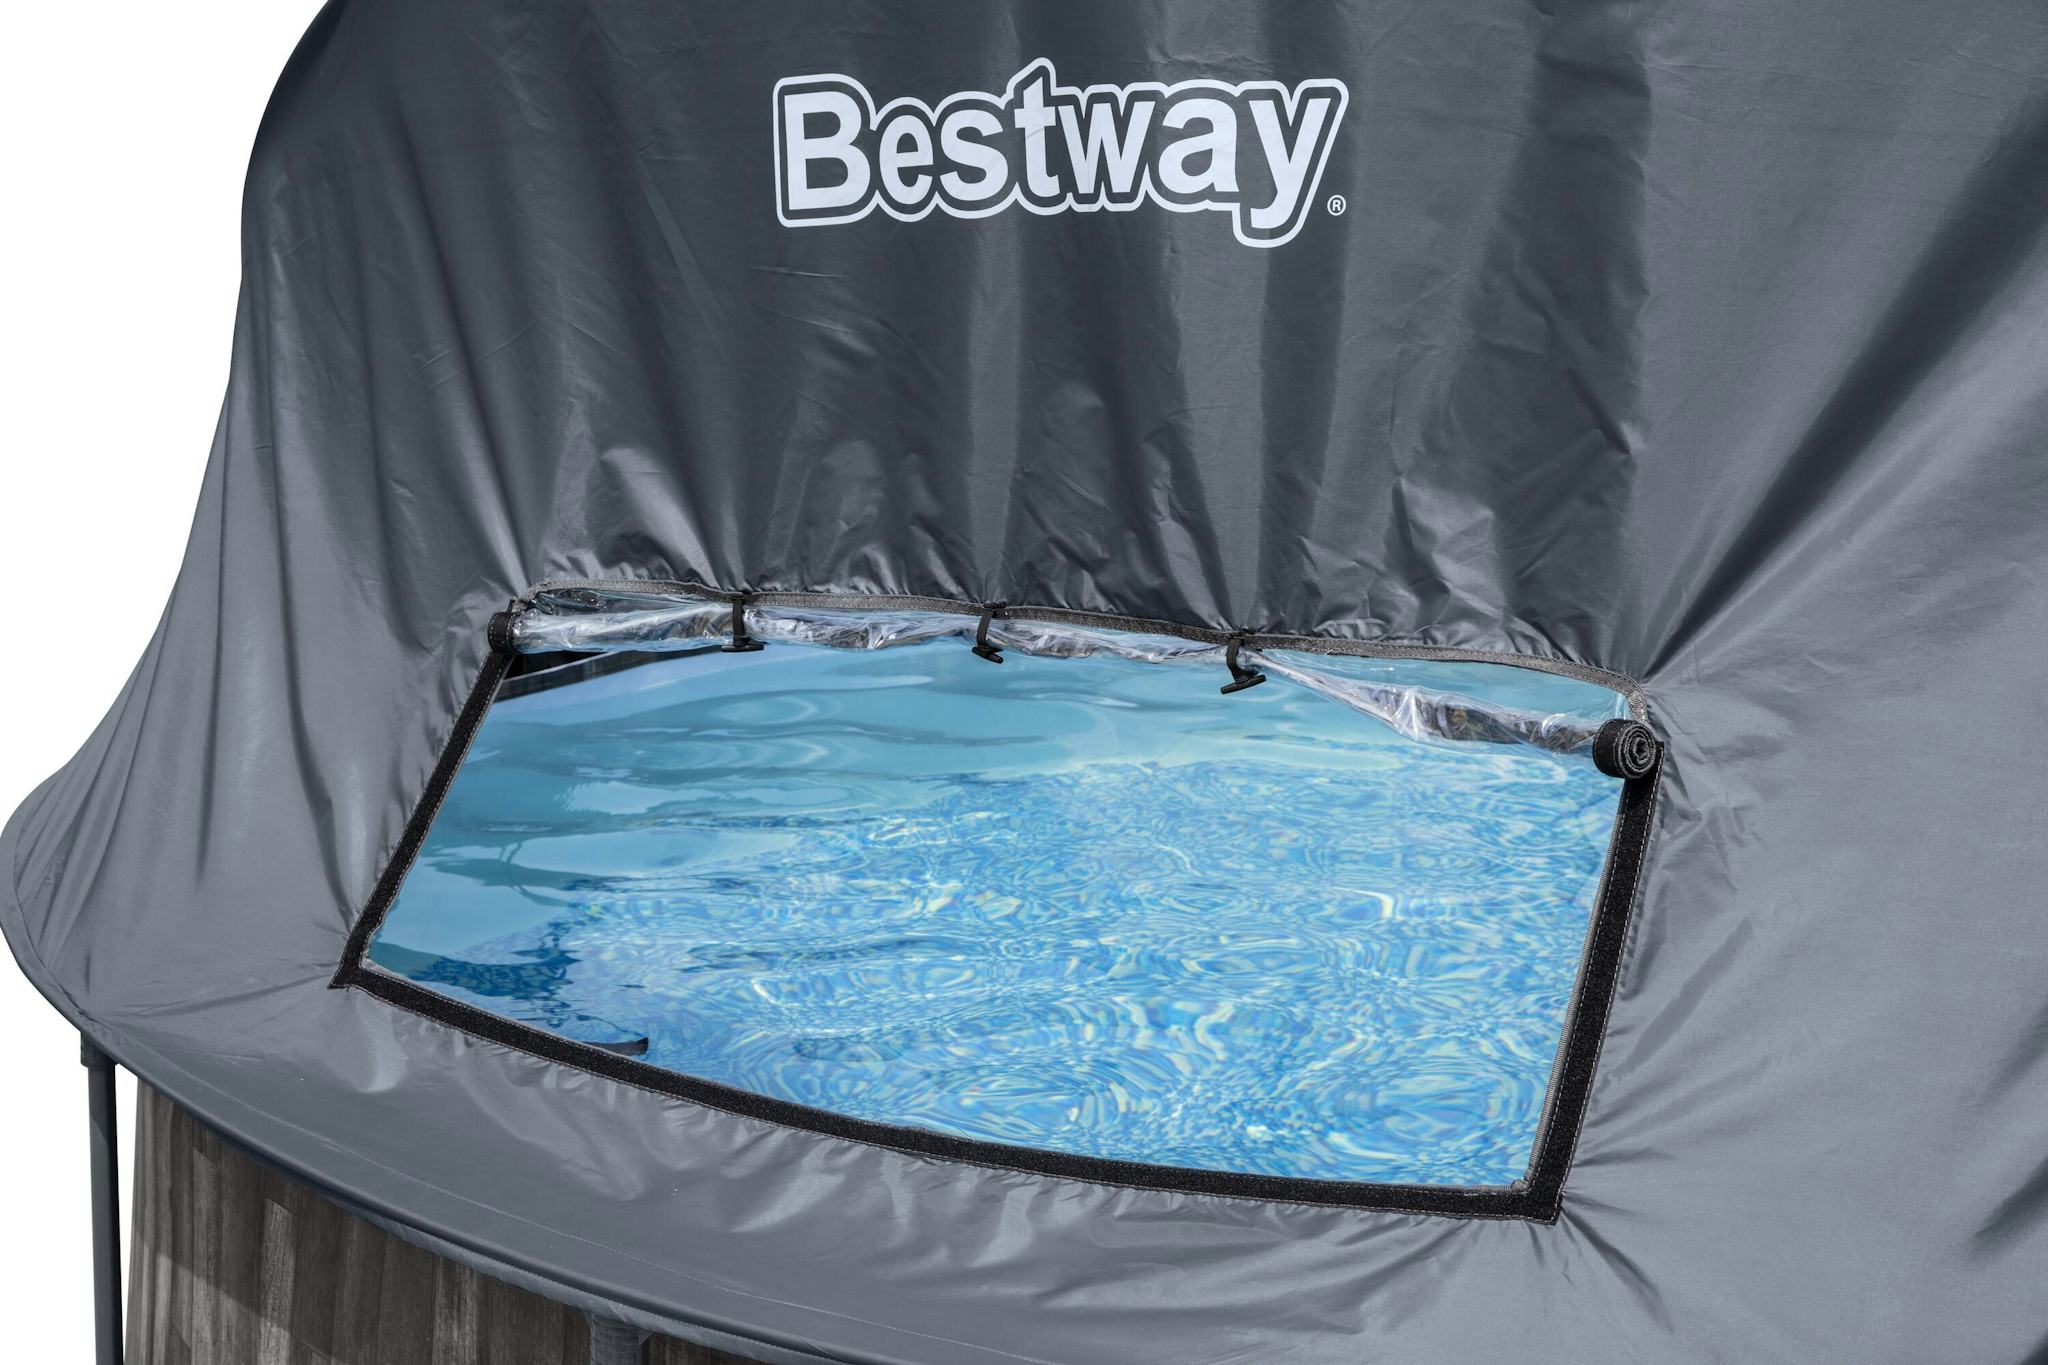 Piscine fuori terra Set piscina fuori terra rotonda Steel Pro MAX da 366x122 cm con tenda parasole Bestway 5